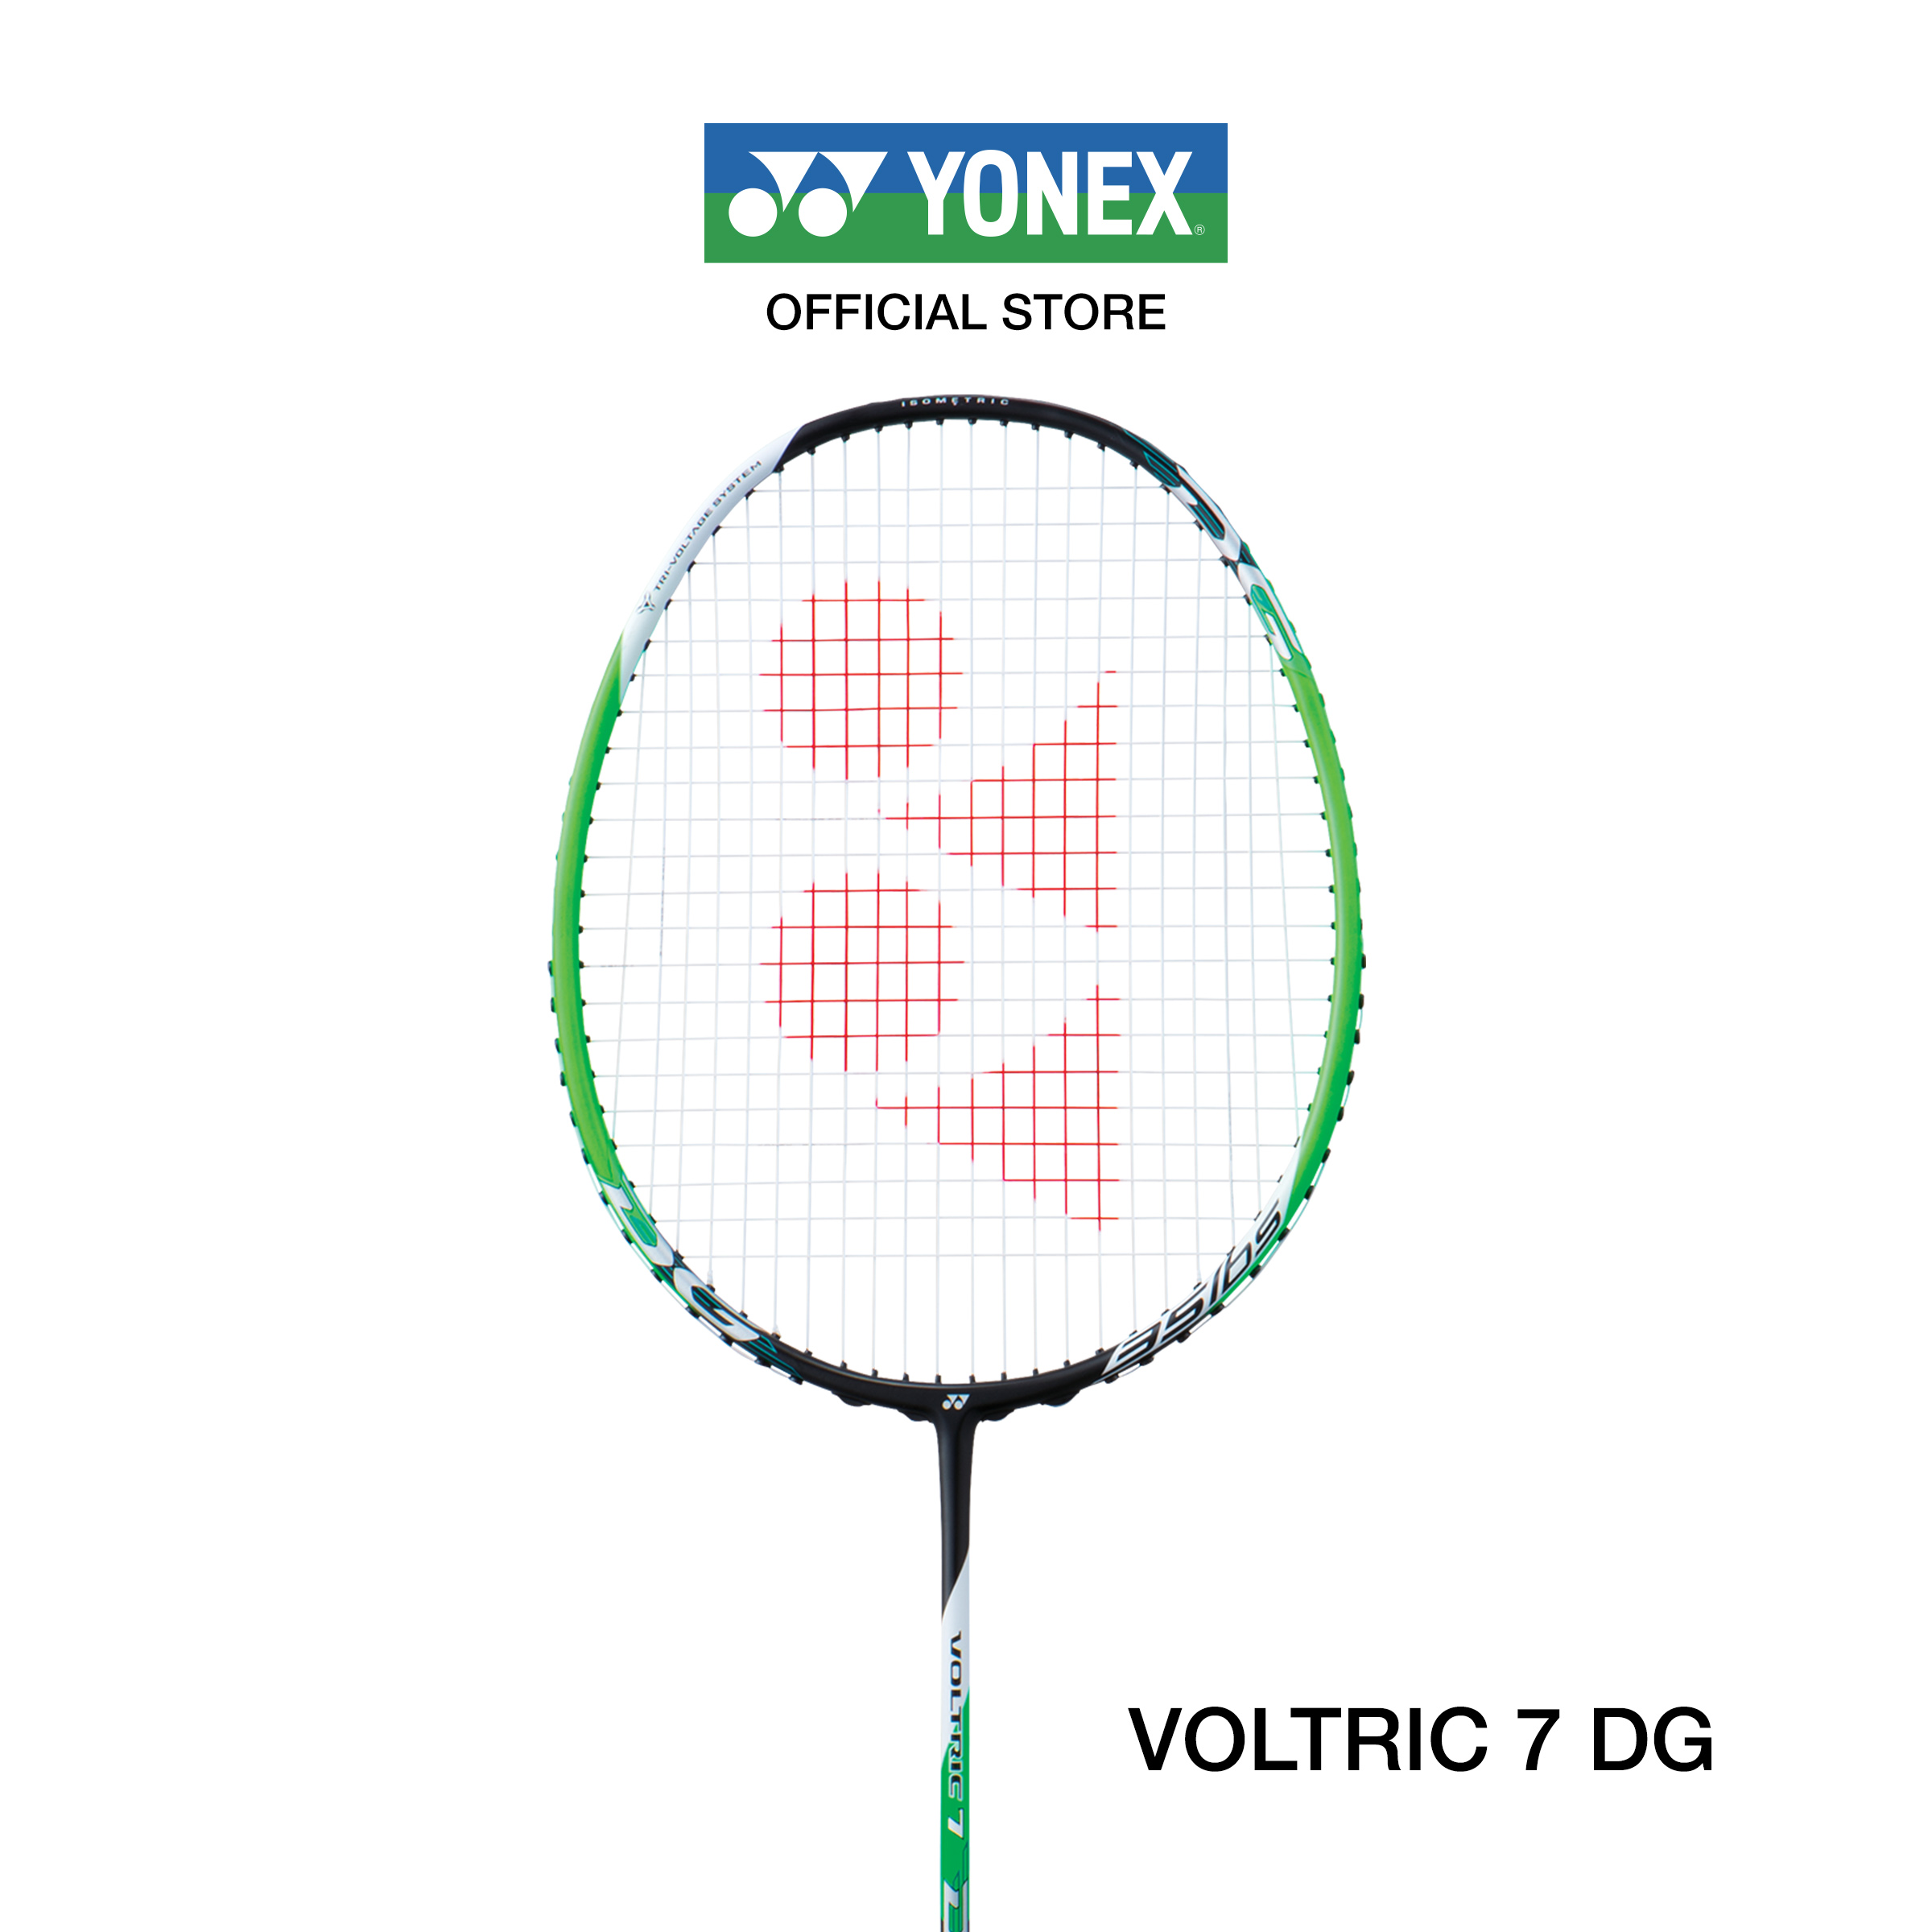 YONEX ไม้แบดมินตันรุ่น VOLTRIC 7 DG น้ำหนัก 88g (3U) ขนาดด้ามไม้ G5 ไม้หัวหนักและก้านกลาง ไม้สามารถขึ้นได้สูงสุด 35 Ibs  แถมเอ็น BG65